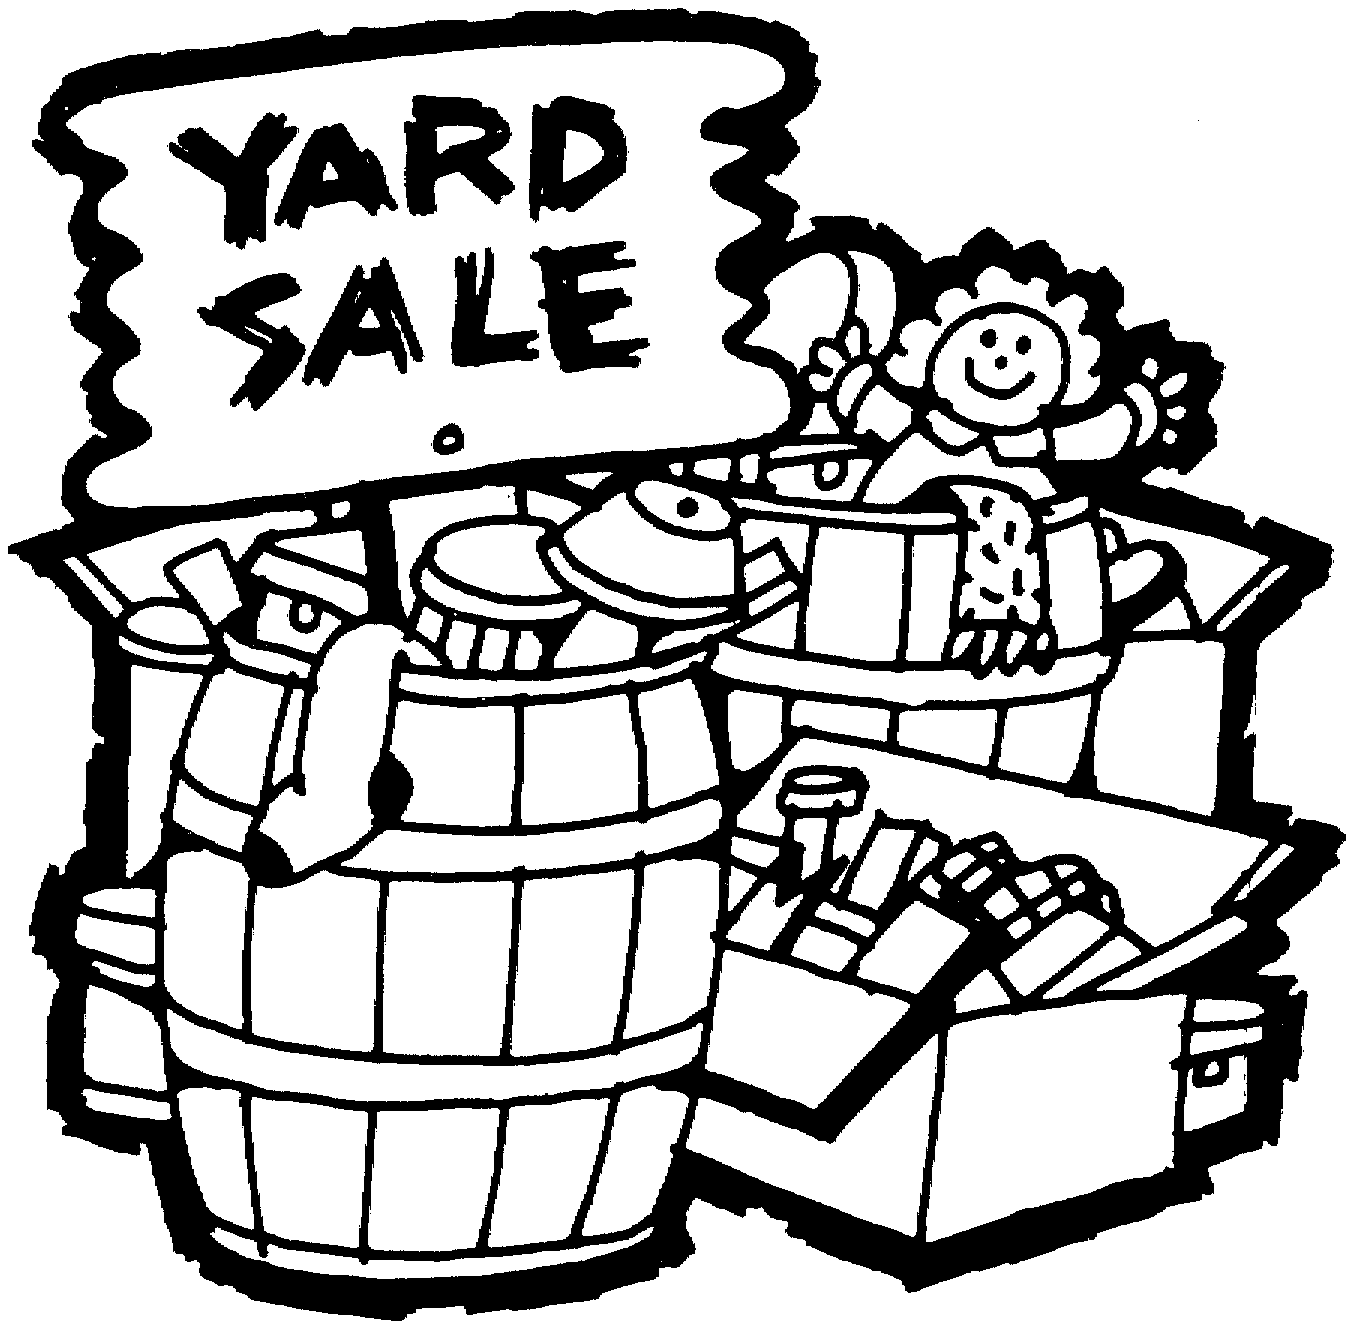 Free Yard Sale Clip Art Black And White, Download Free Yard 